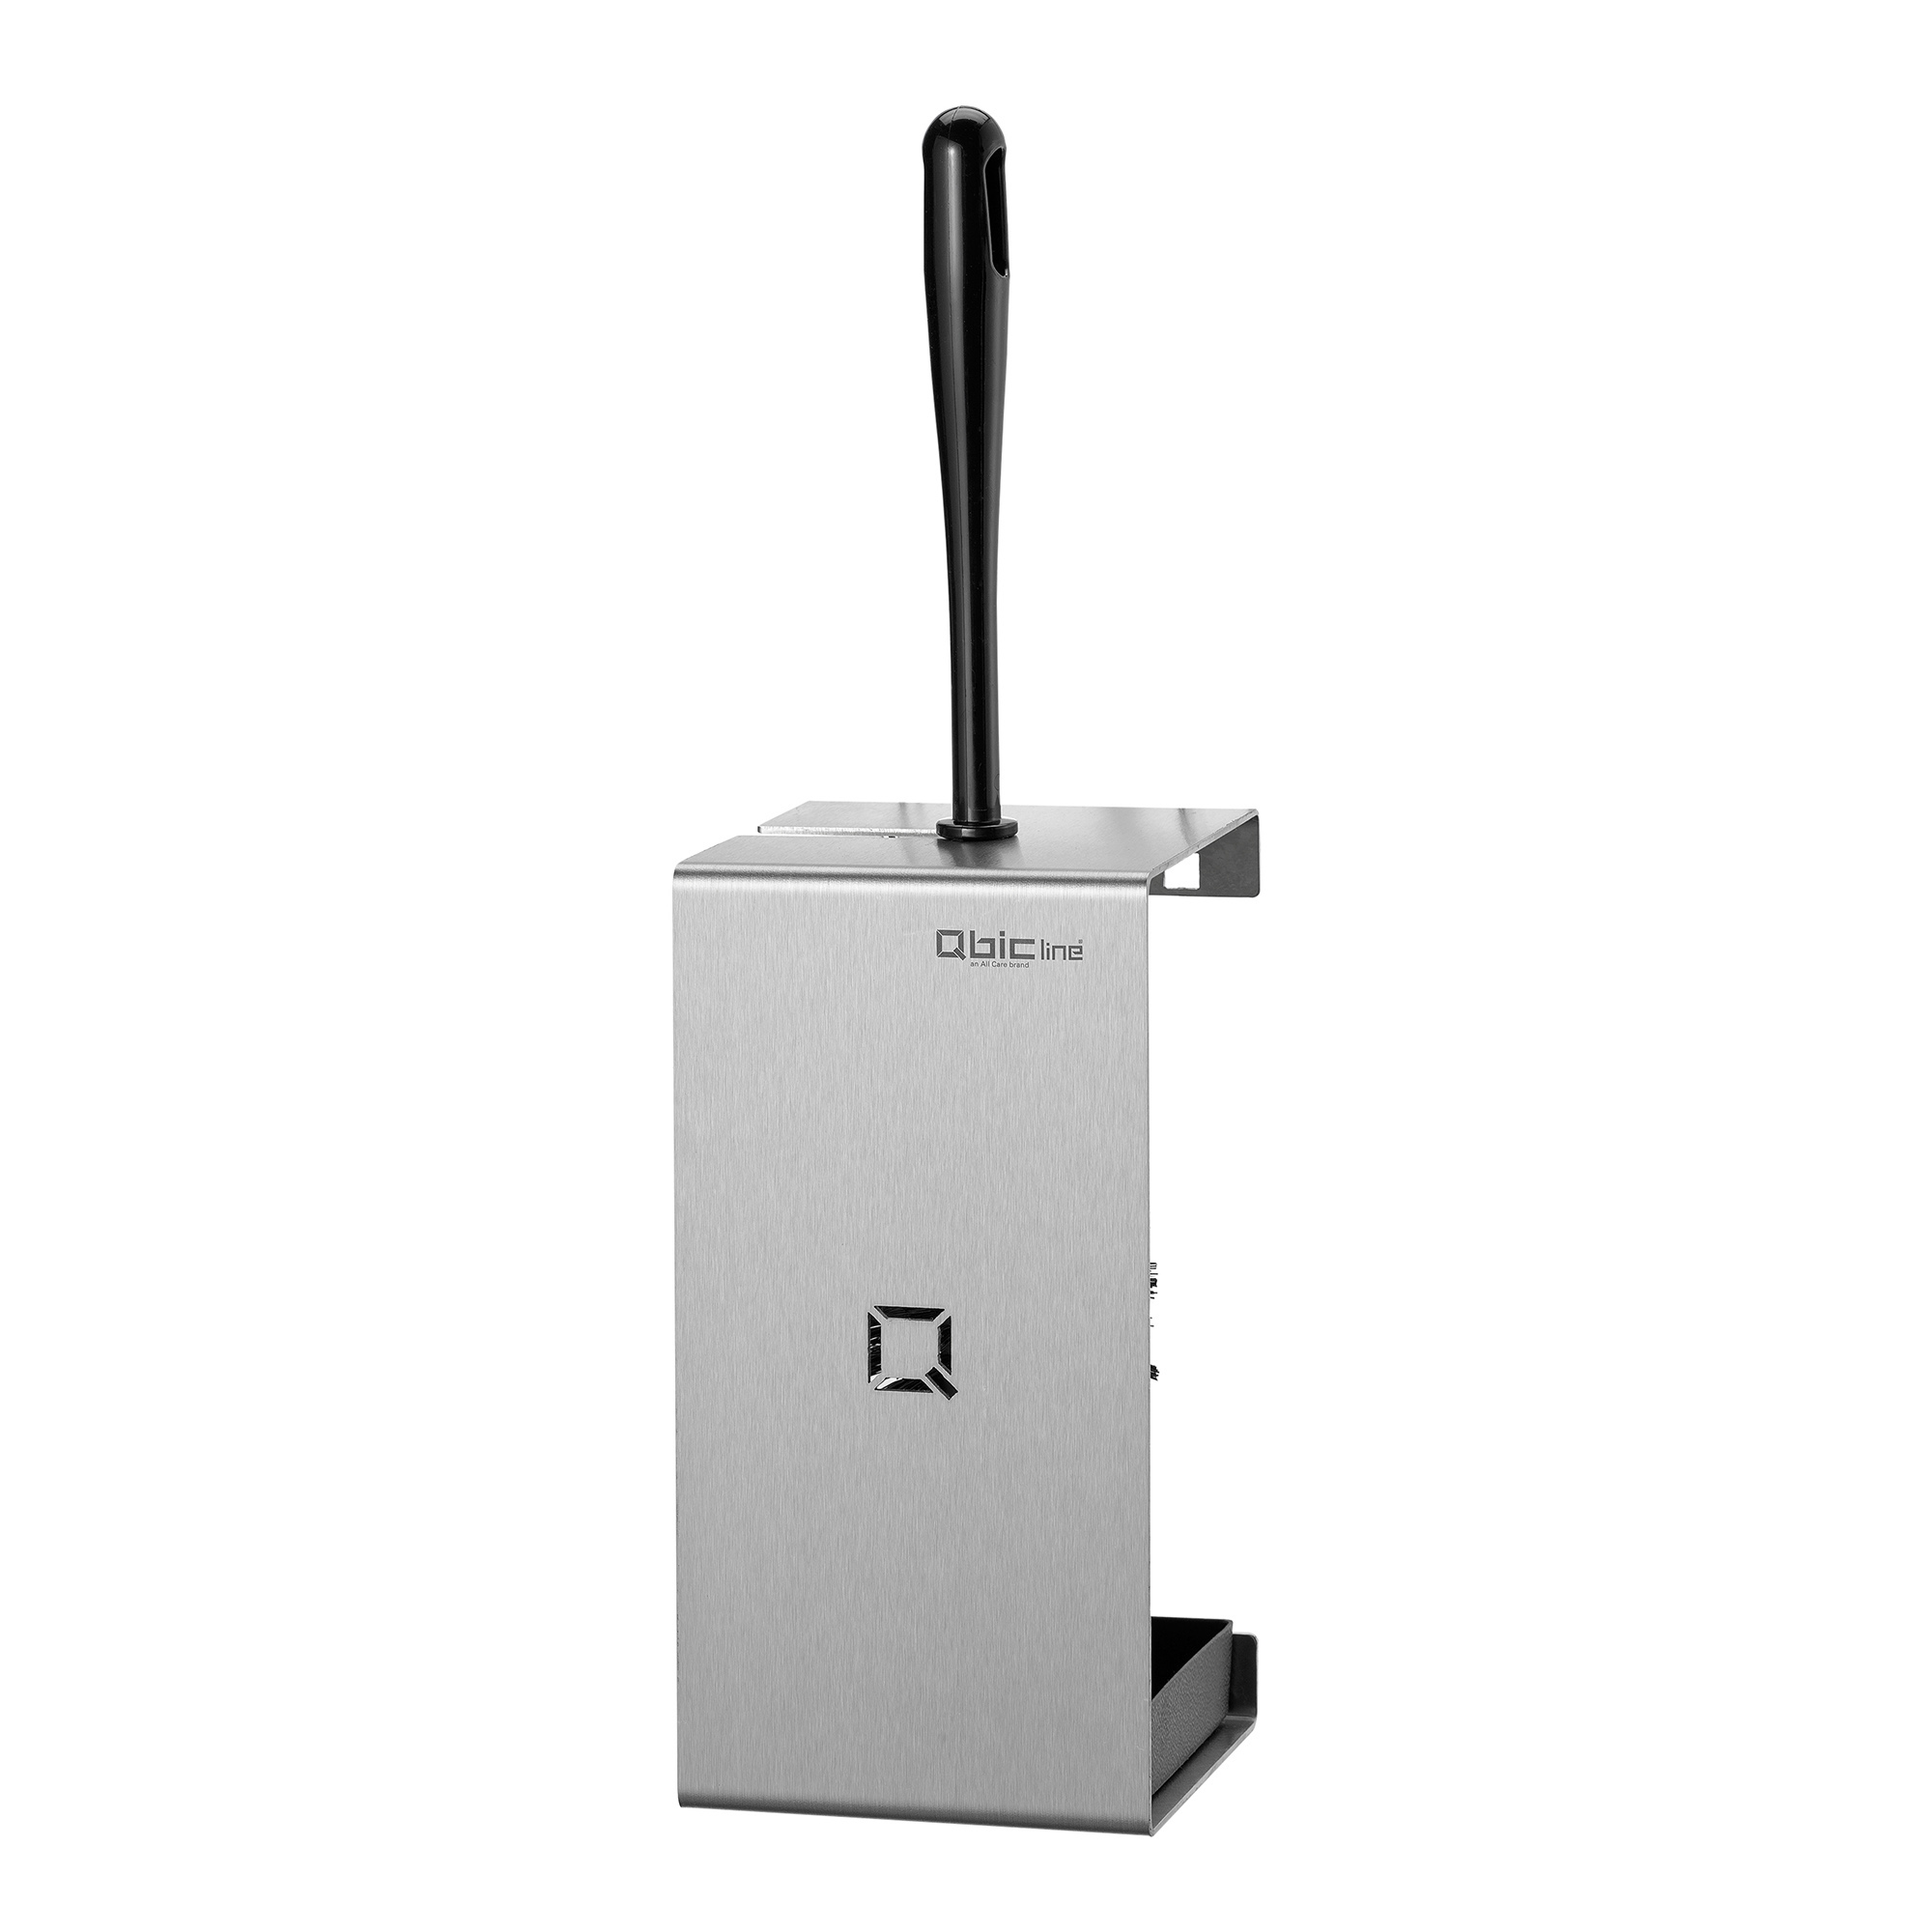 Qbic-line Toilettenbürstenhalter QTBH SSL Edelstahl matt 6760_1